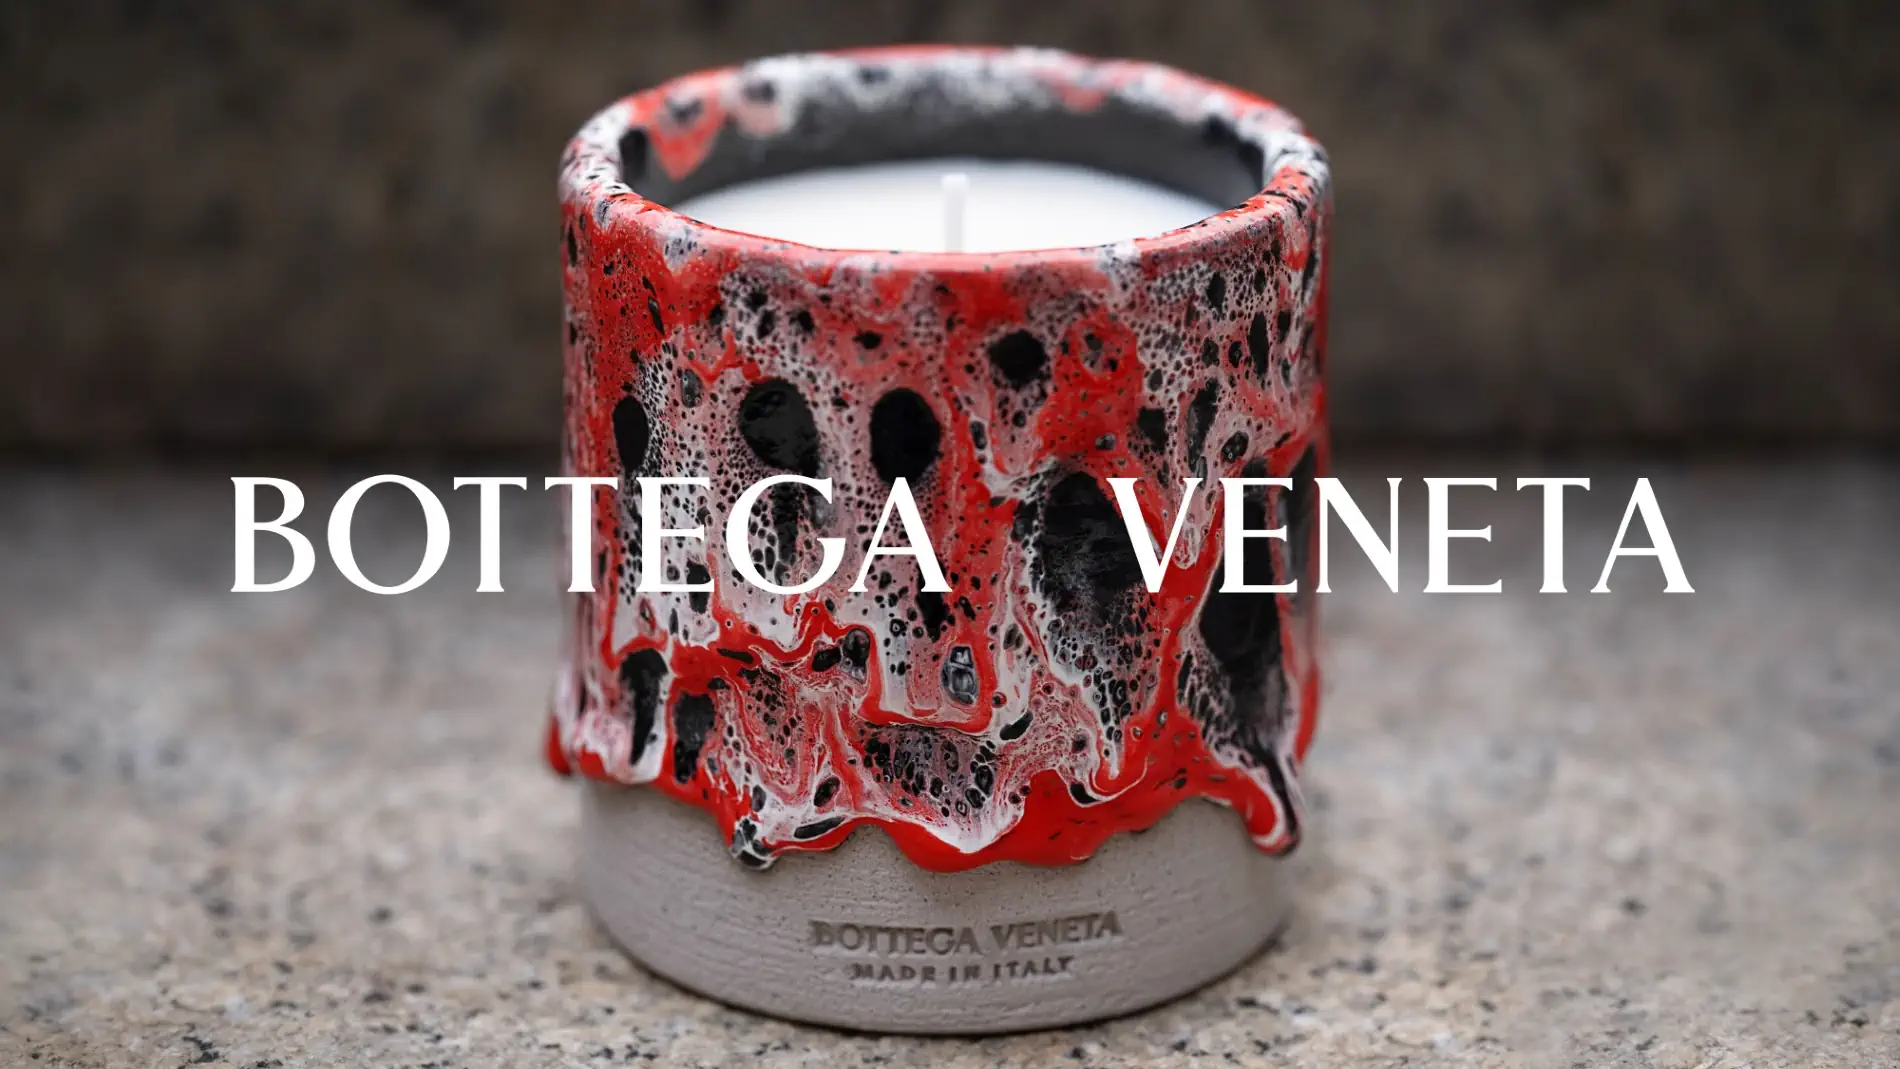 Bottega Veneta unveils exquisite scented candles in handcrafted Italian clay pots